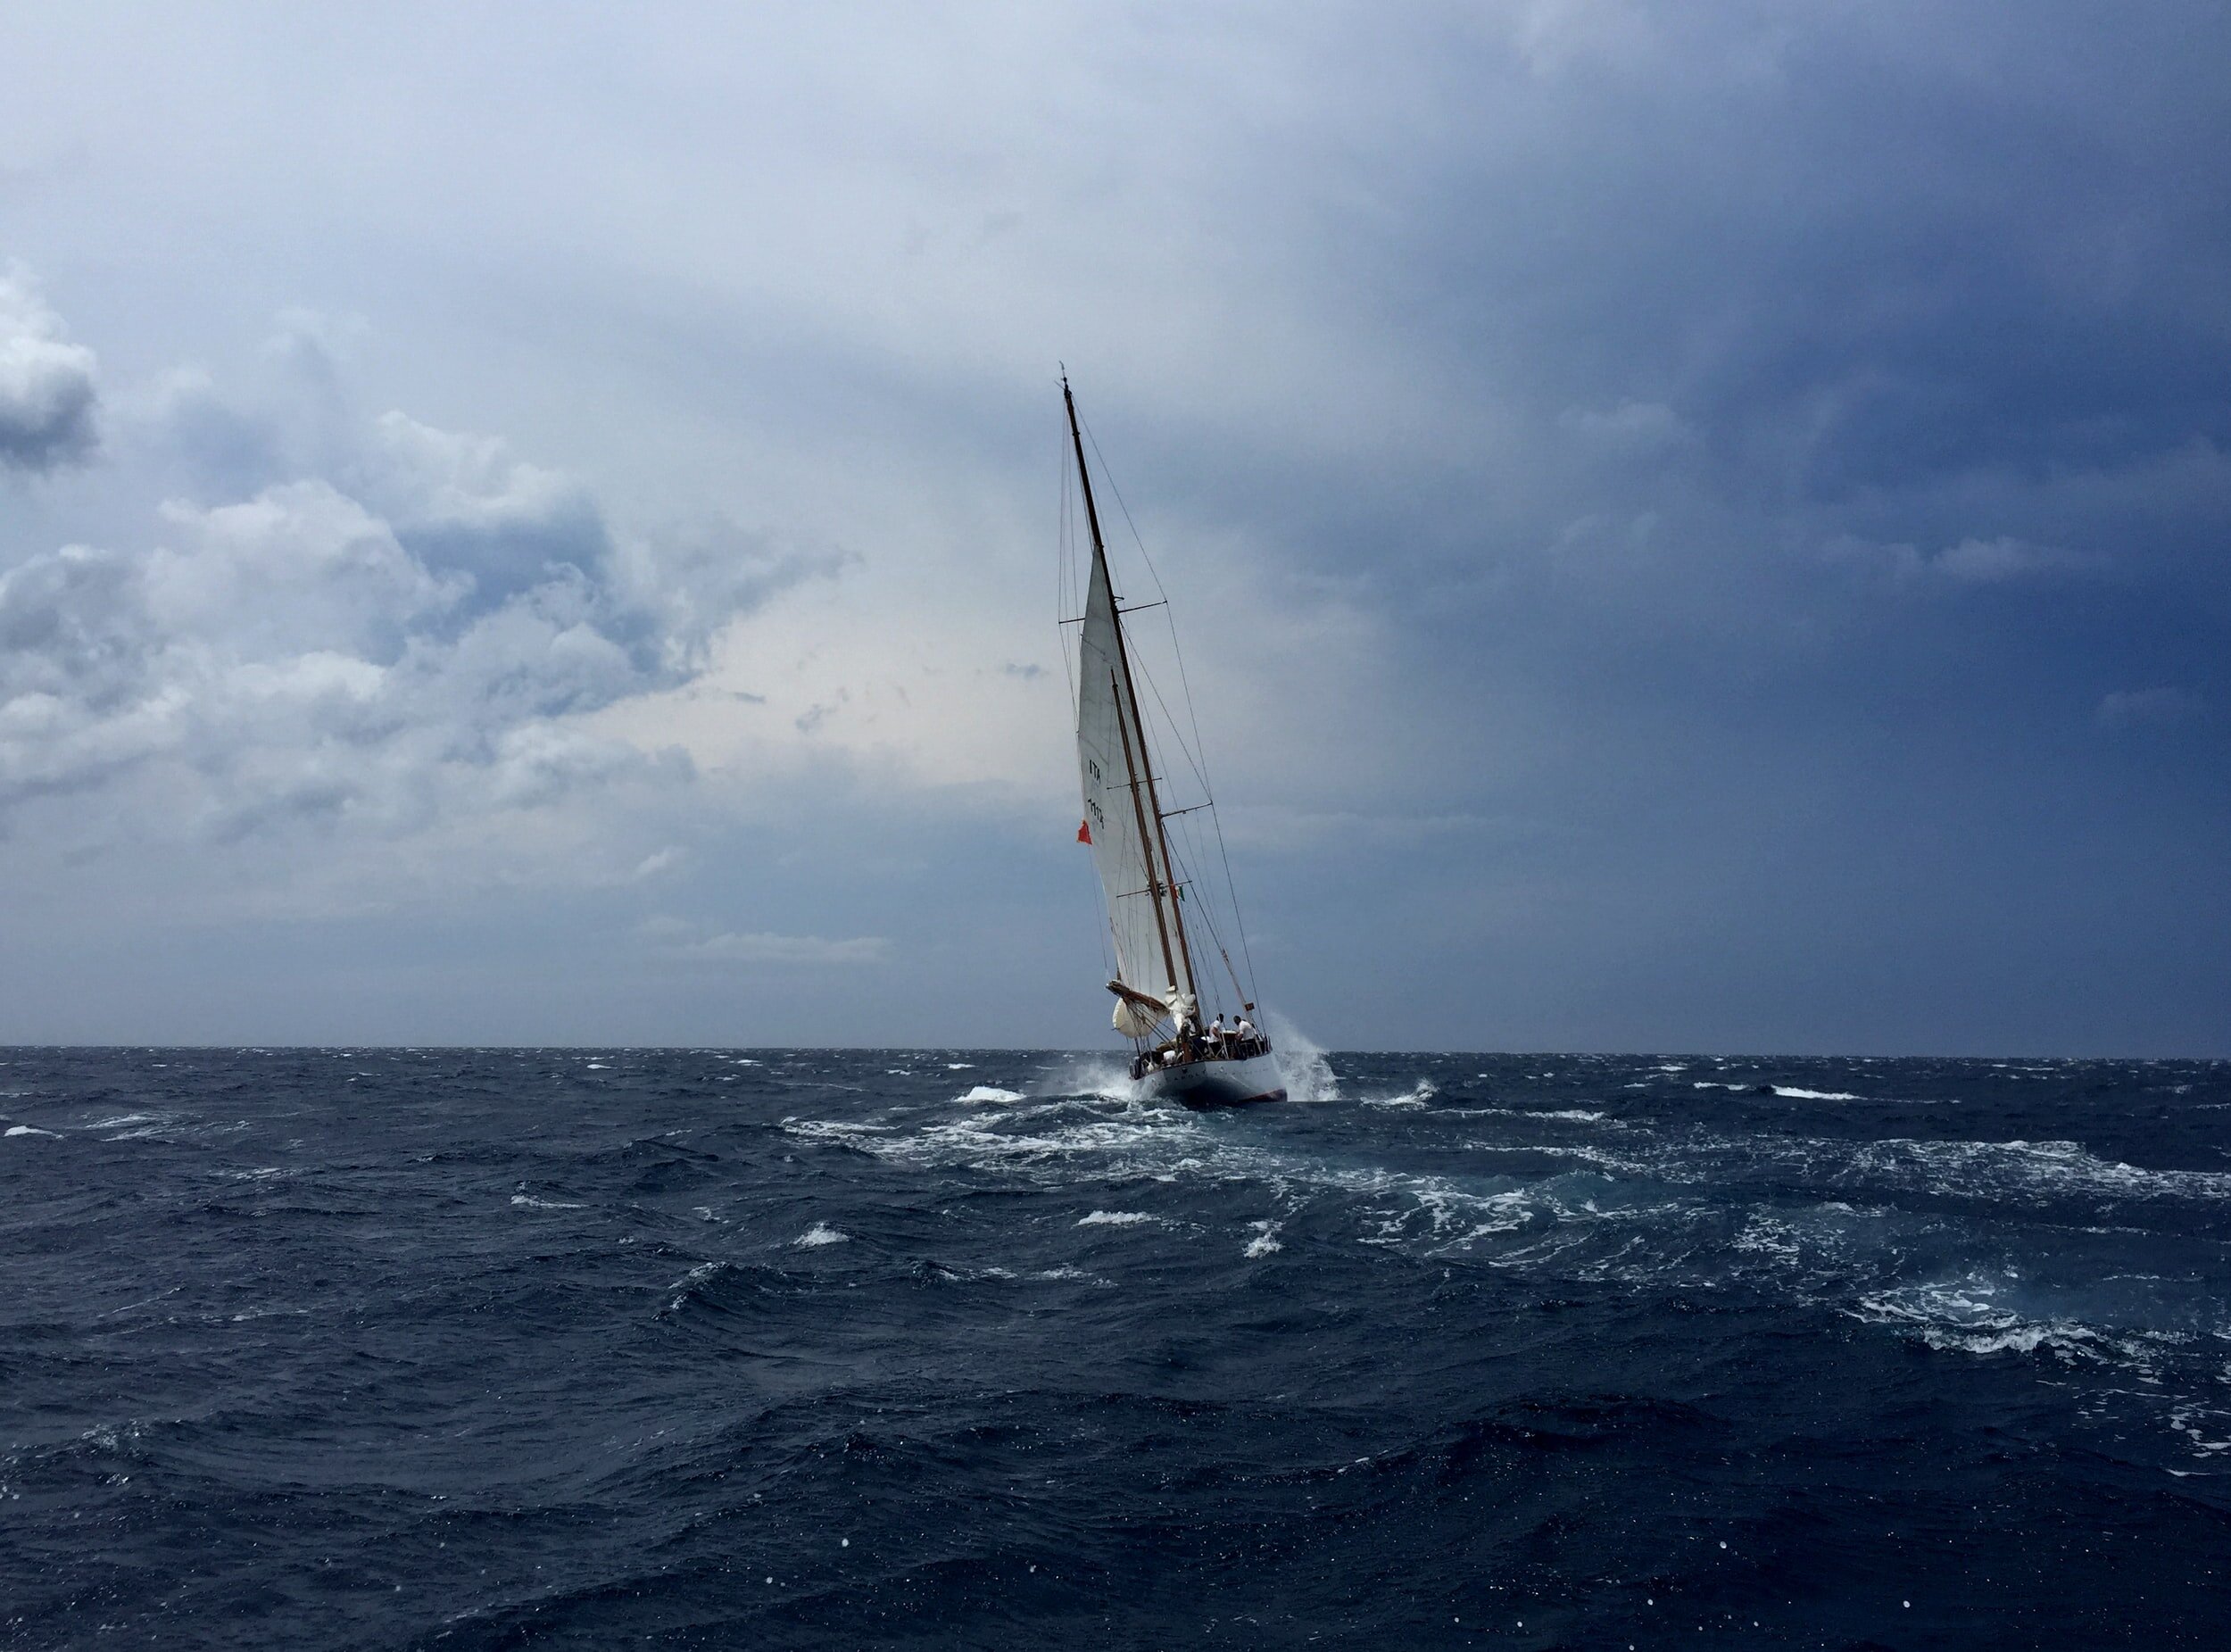 sail-boat-on-choppy-seas